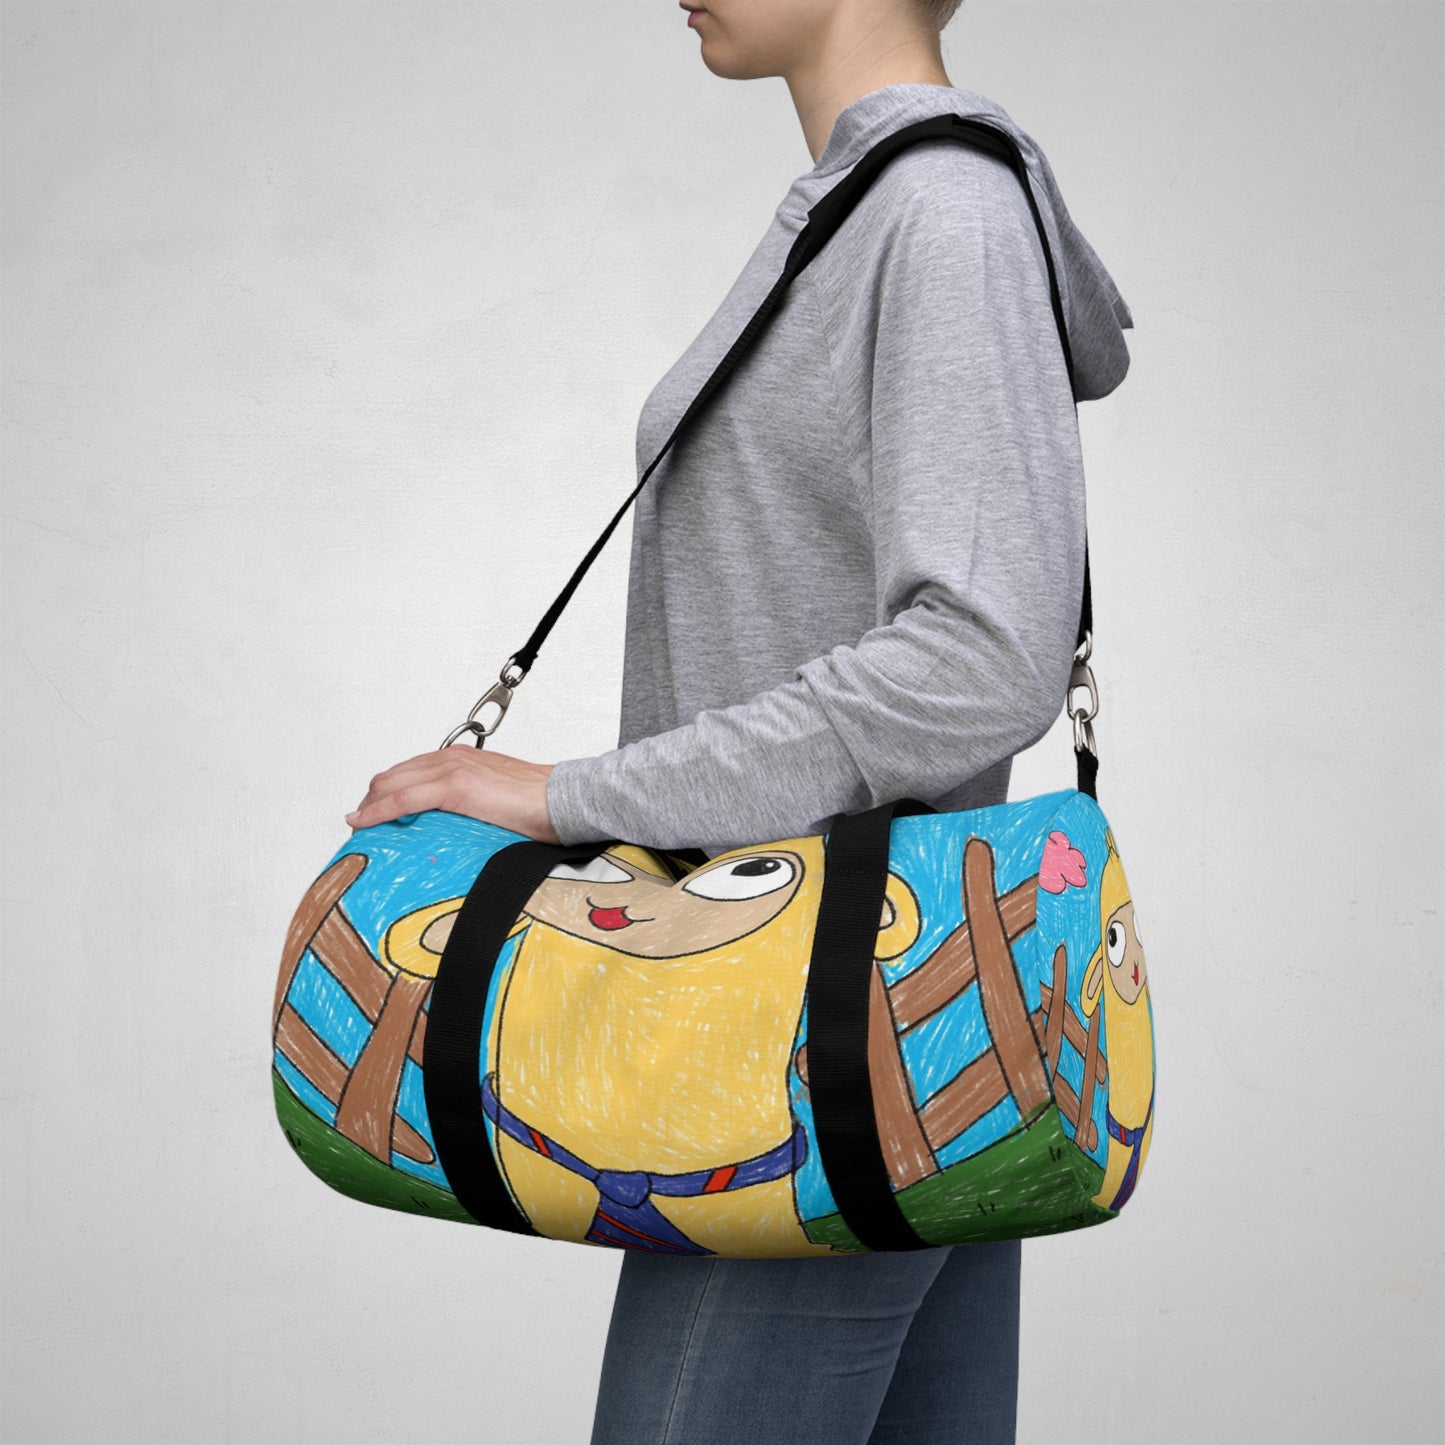 Llama Lovers: Heart and Animal Design Graphic Duffel Bag